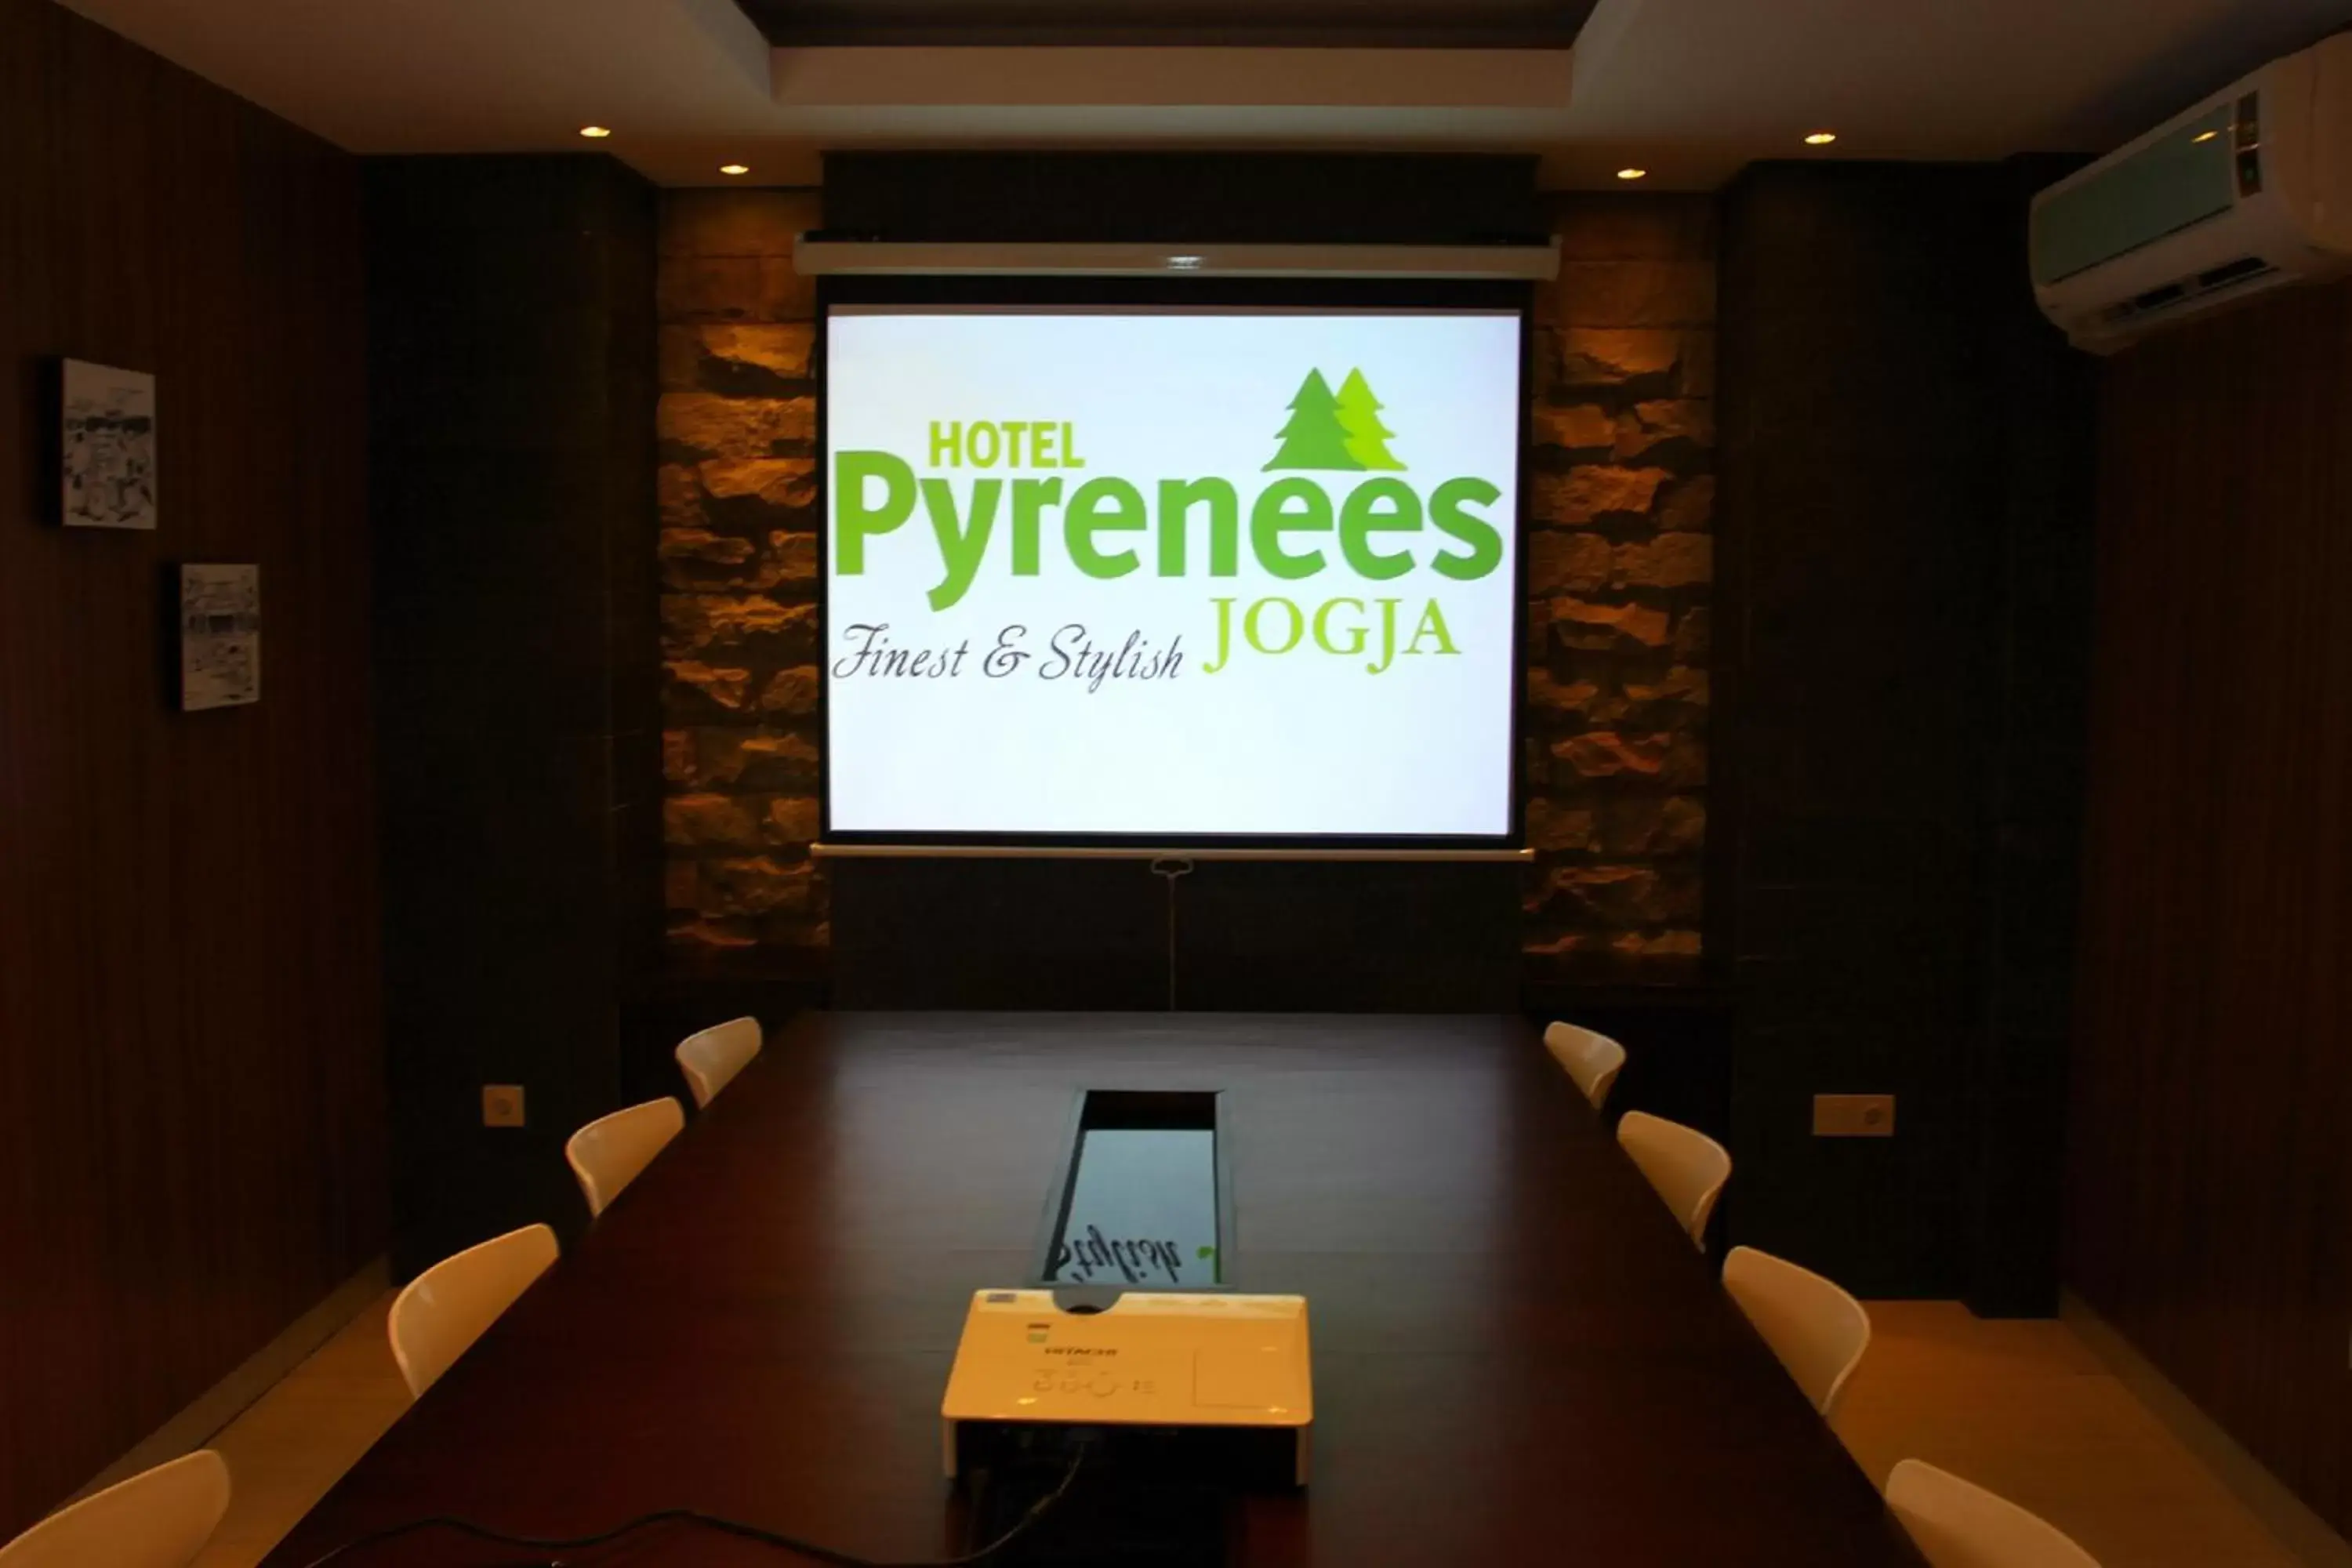 Business facilities in Pyrenees Jogja